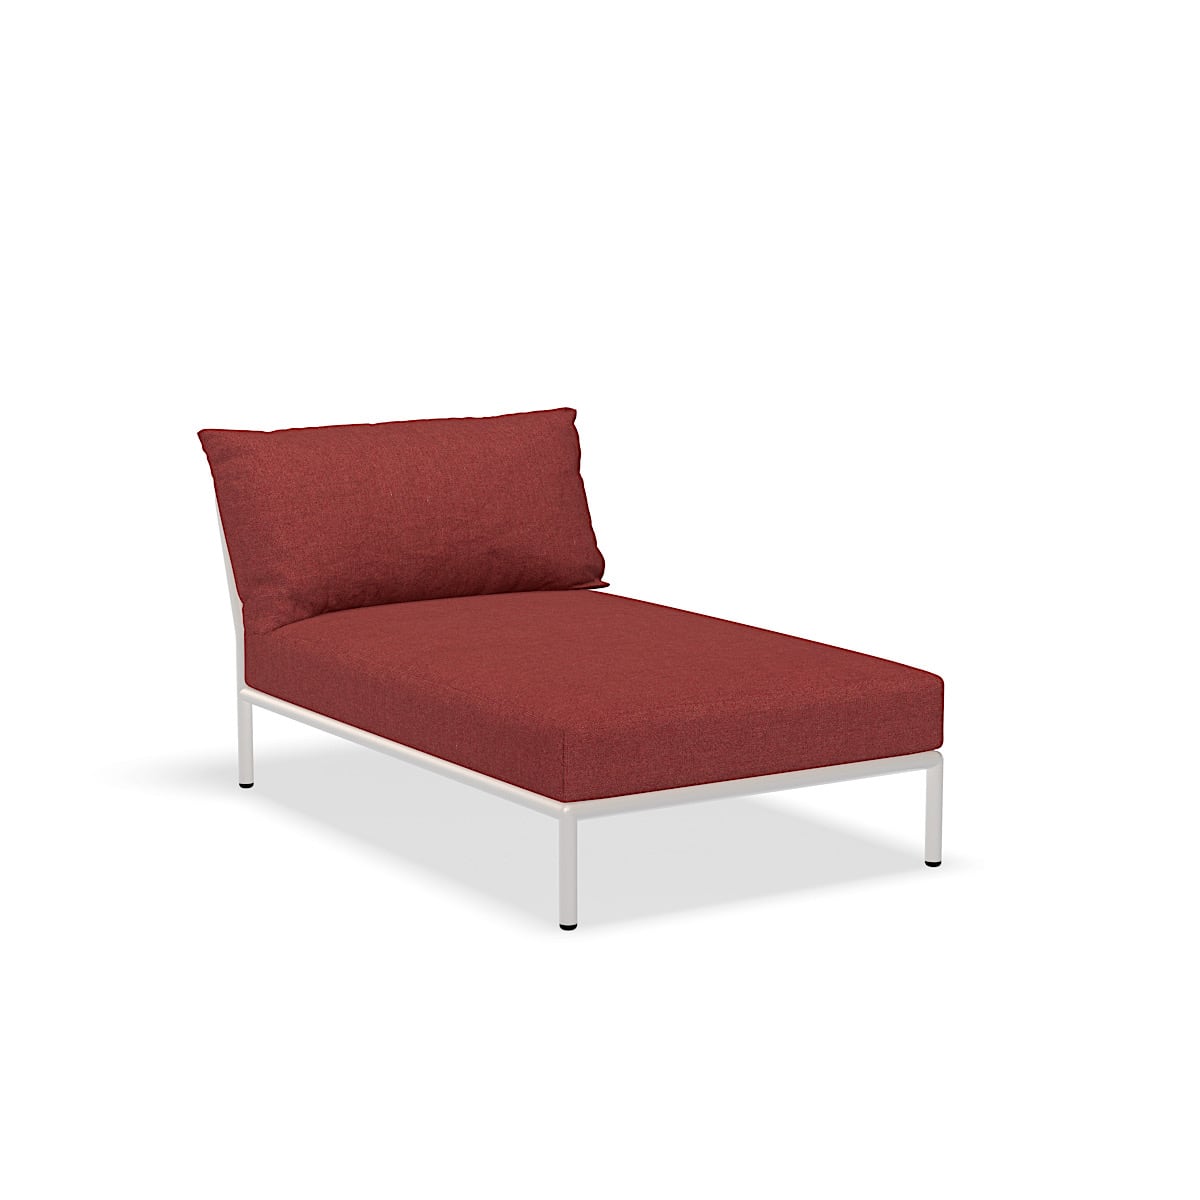 躺椅：139 x 81 x 68.5 釐米（長 x 寬 x 高） - 22209-1643 - 躺椅， Scarlet （HERITAGE）， 白色結構